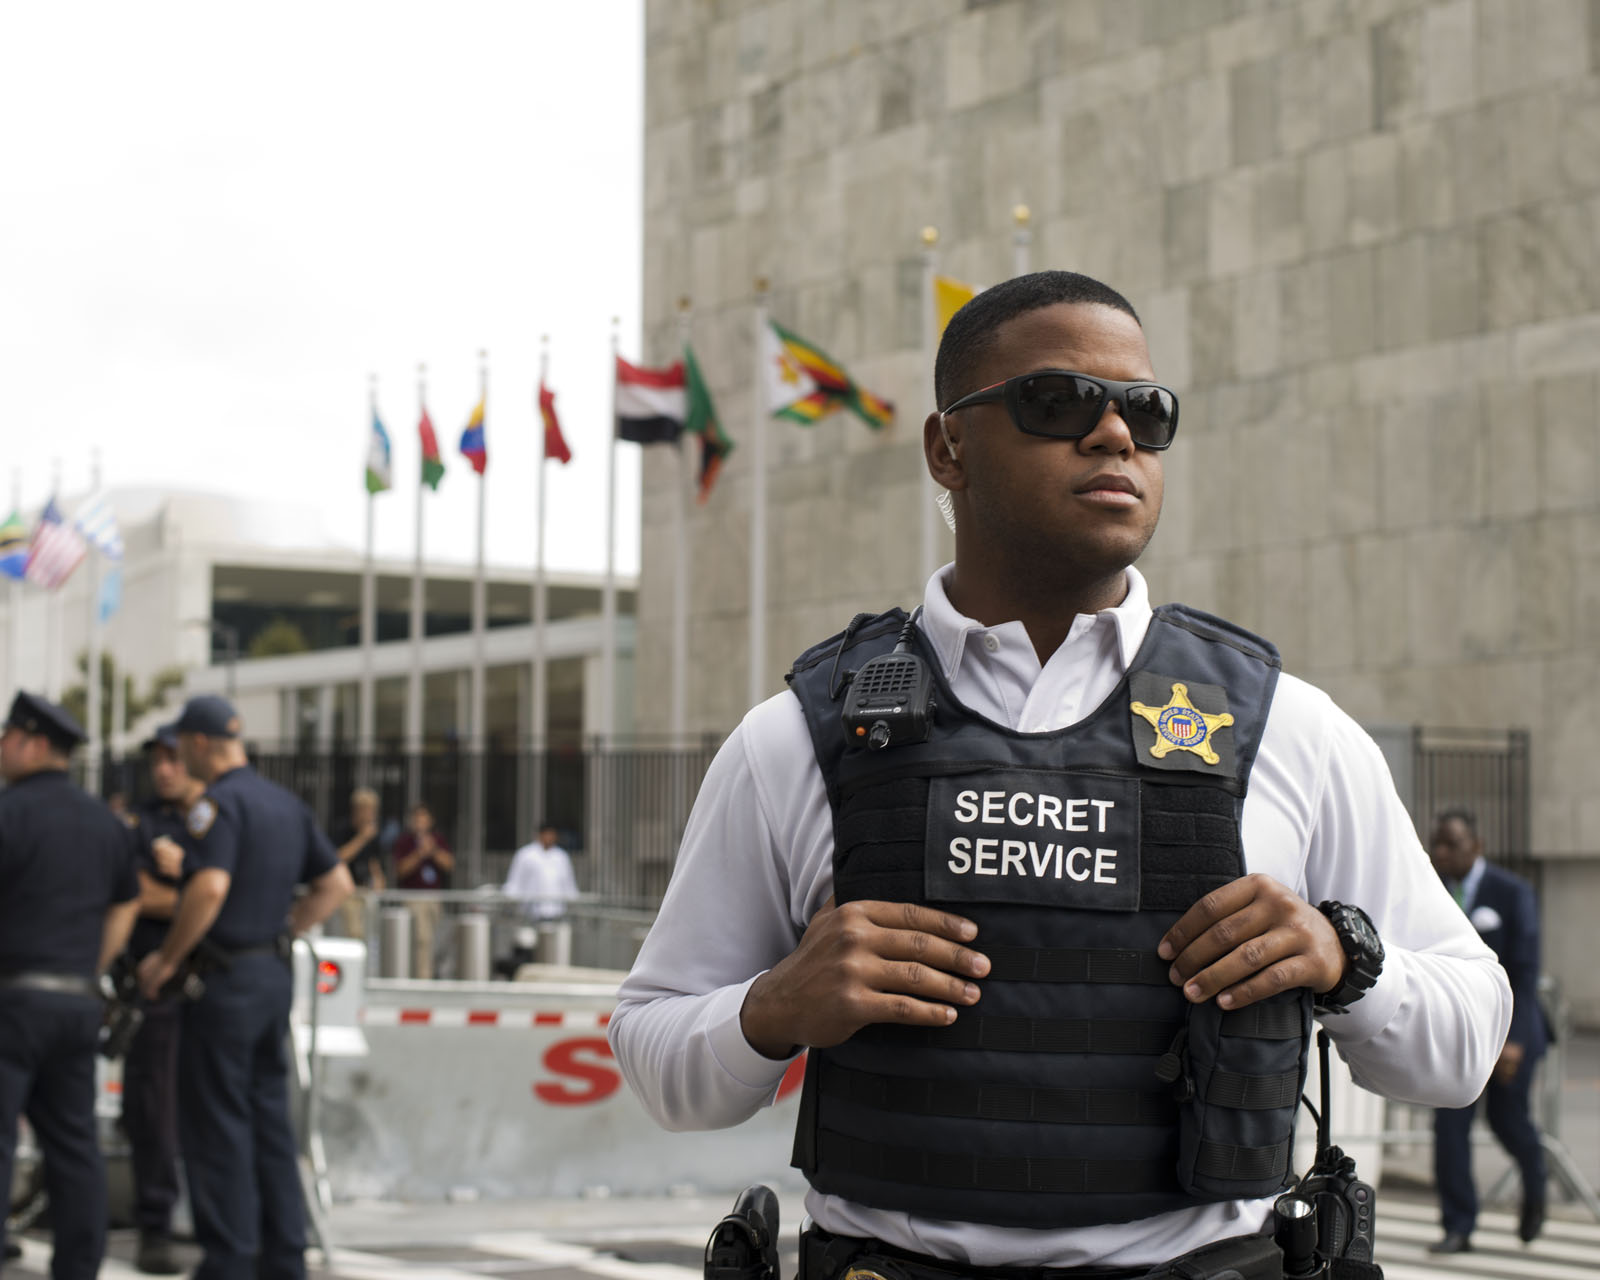 Black SECRET SERVICE UNIFORMED DIVISION POLICE PATCH 